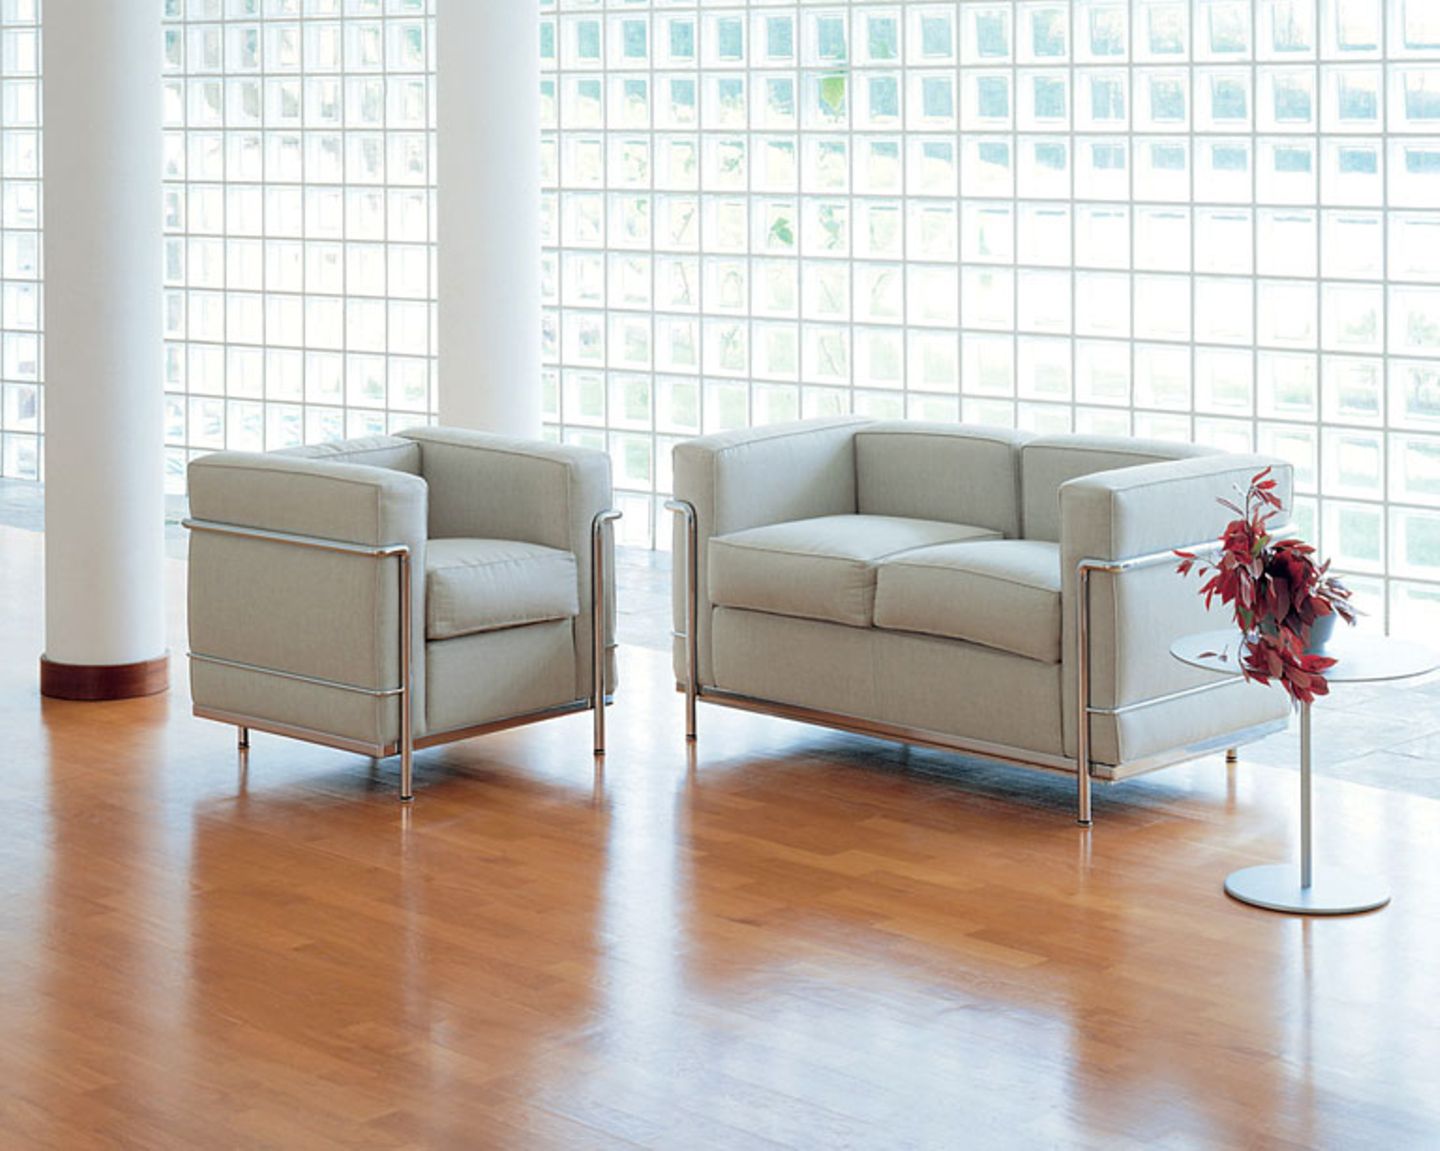 Hausdoktor: Welches Sofa passt zum Le Corbusier-Sessel?